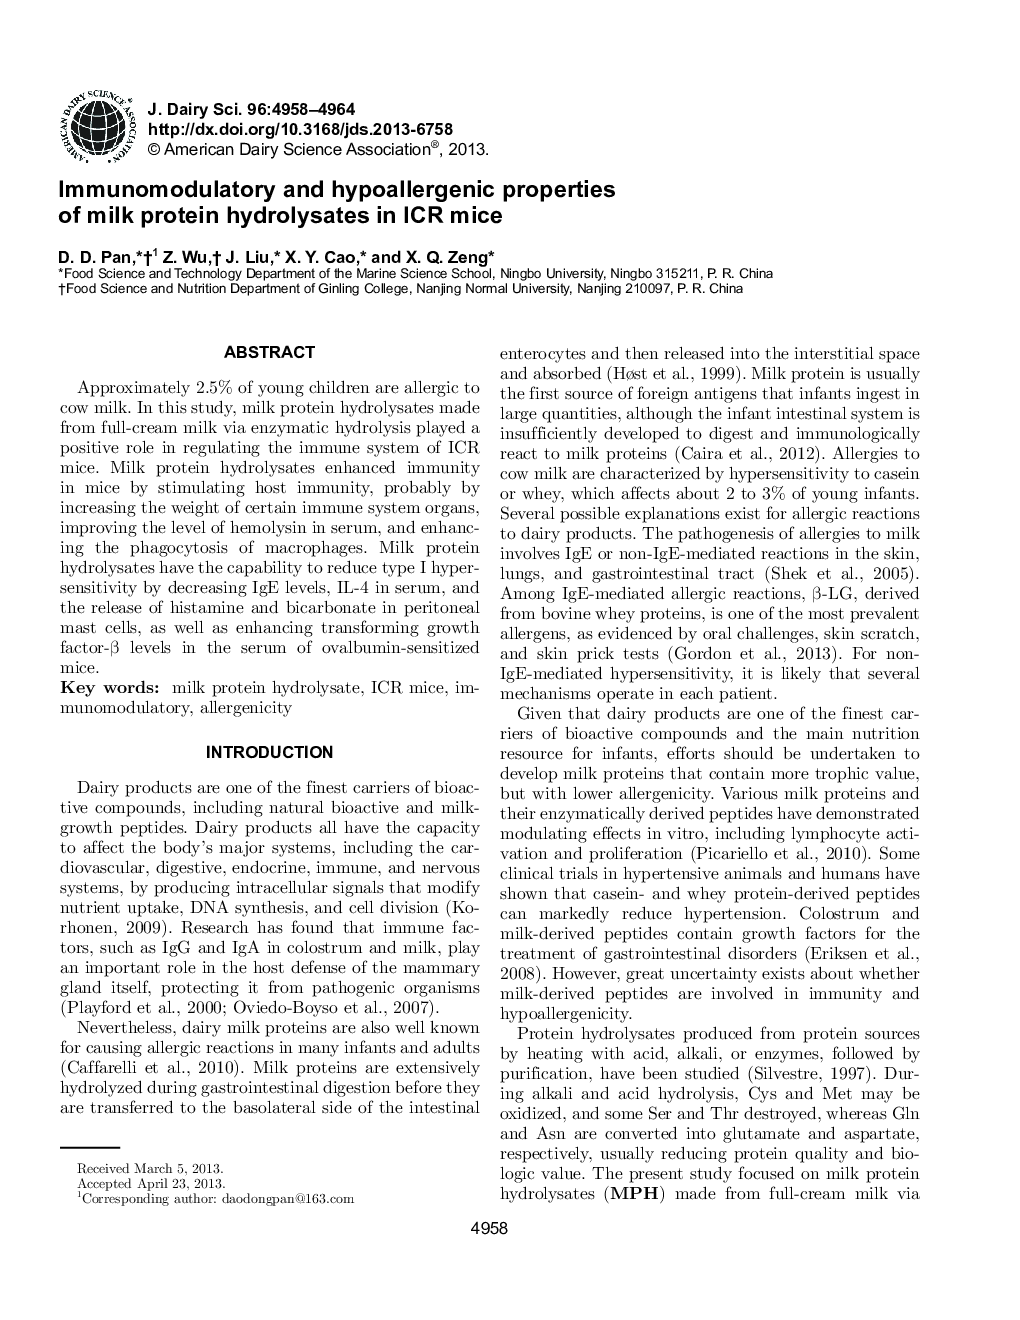 Immunomodulatory and hypoallergenic properties of milk protein hydrolysates in ICR mice